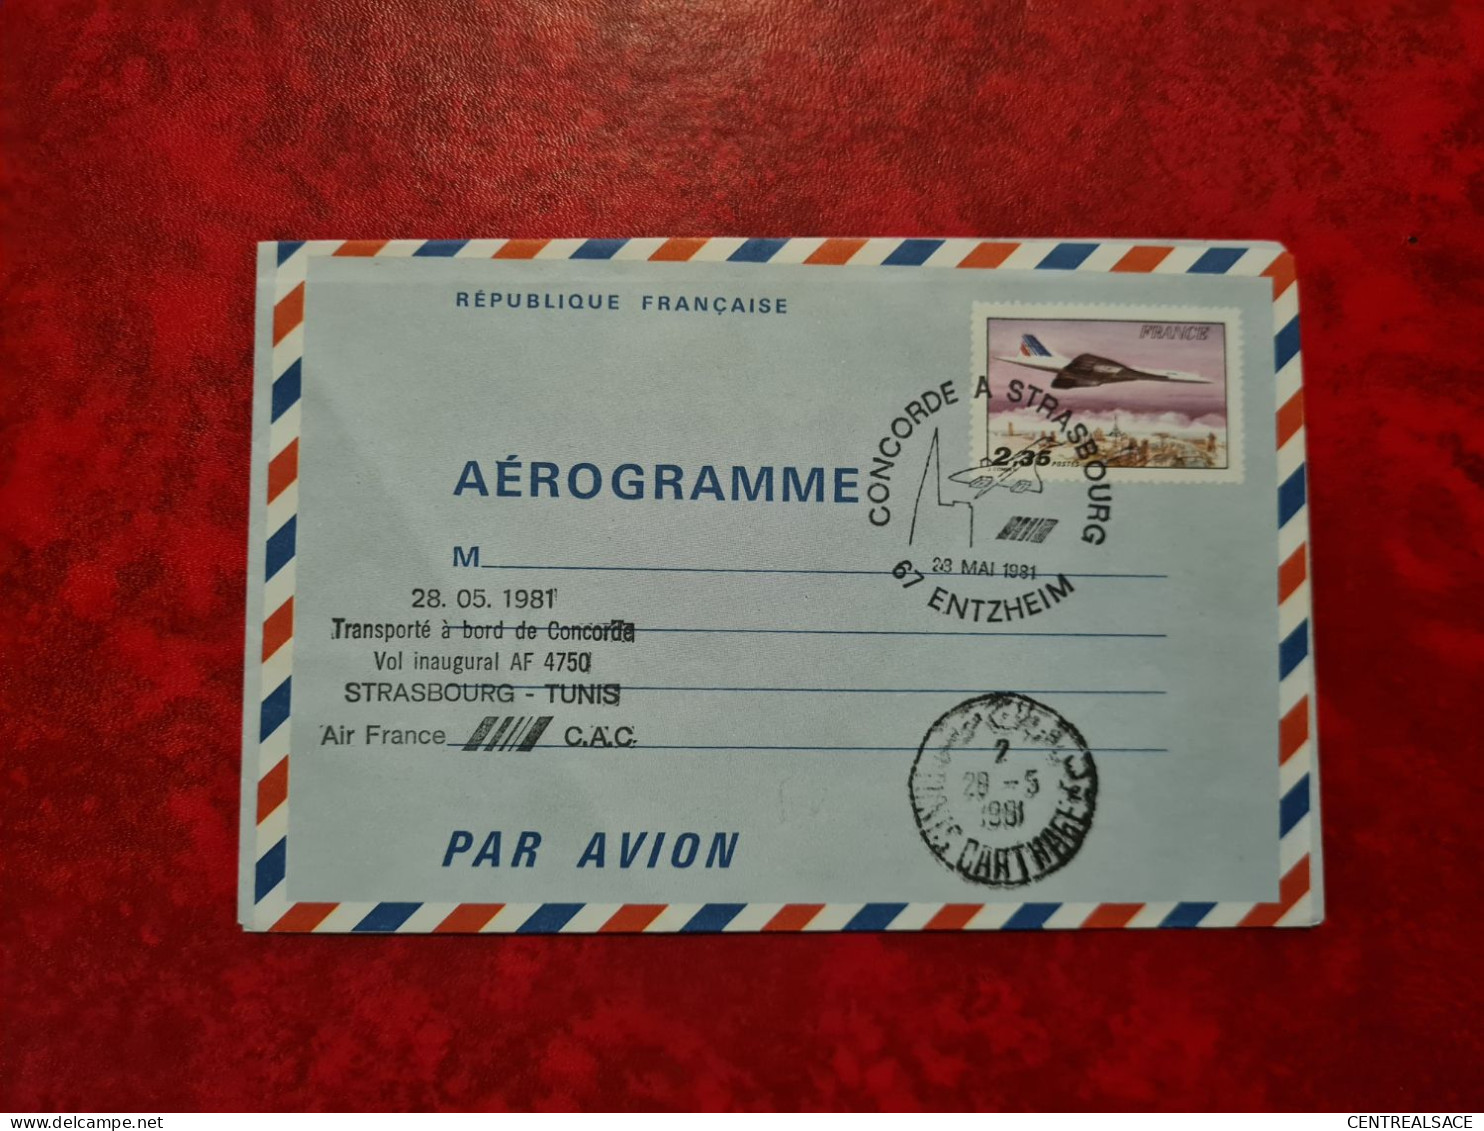 AEROGRAMME 1981 CONCORDE A STRASBOURG ENTZHEIM VOL INAUGURAL STRASBOURG TUNIS - Aerograms